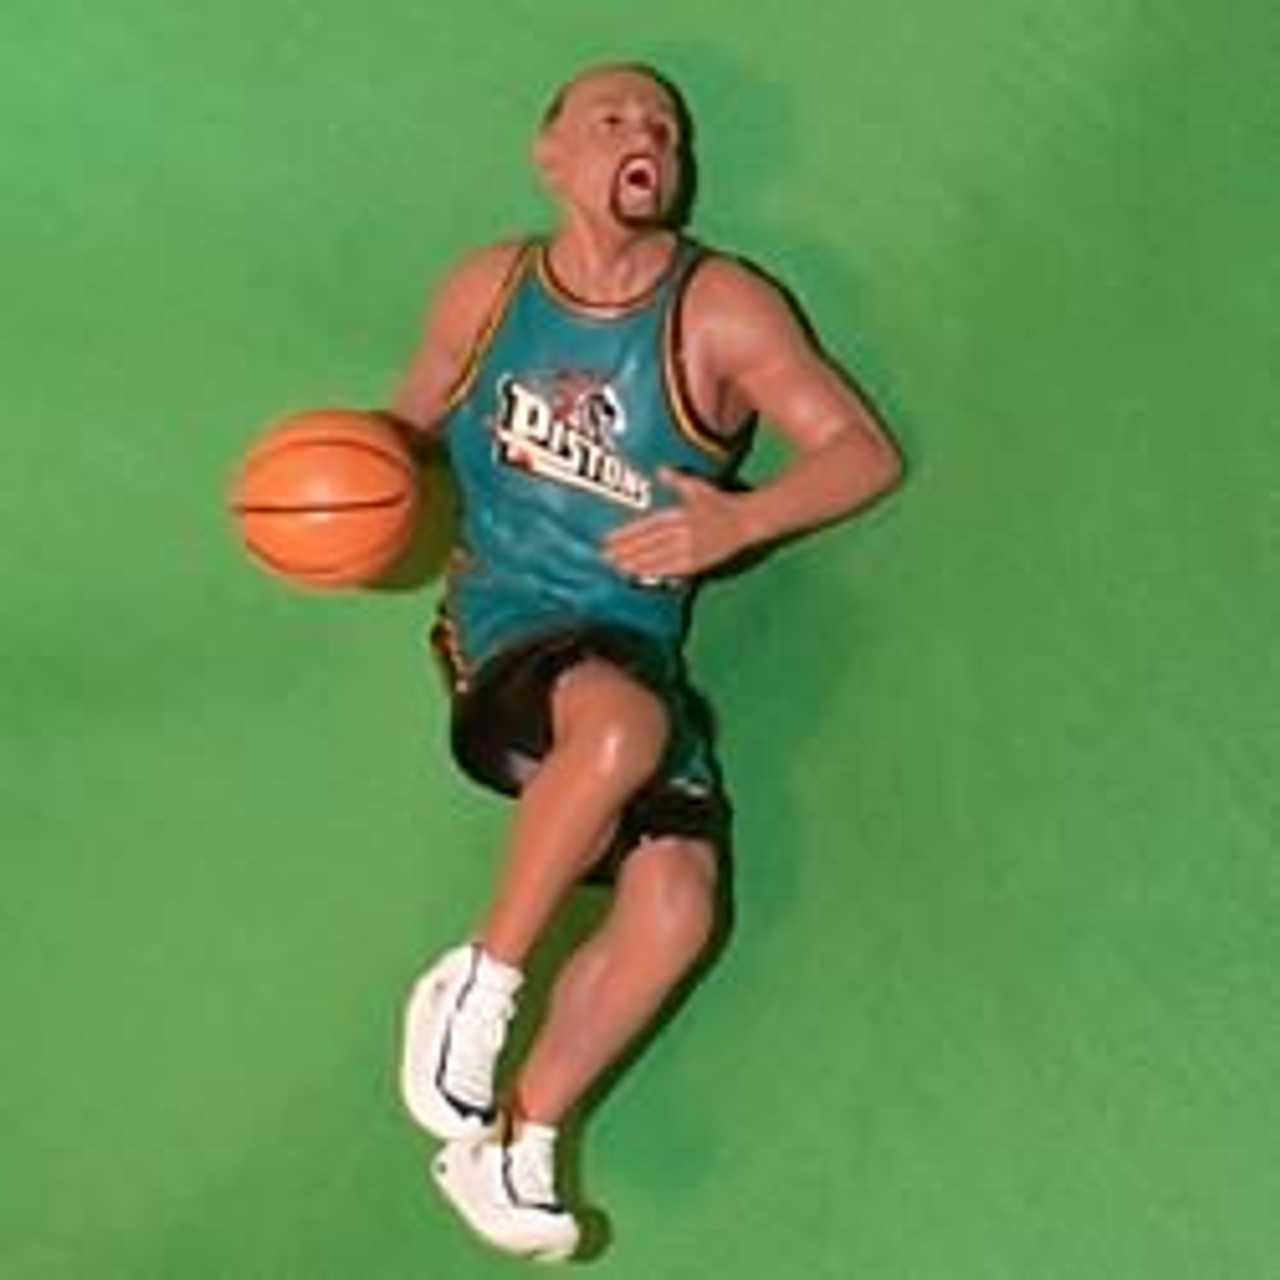 Mcfarlane NBA 20 Carmelo Anthony Knicks green exclusive figure